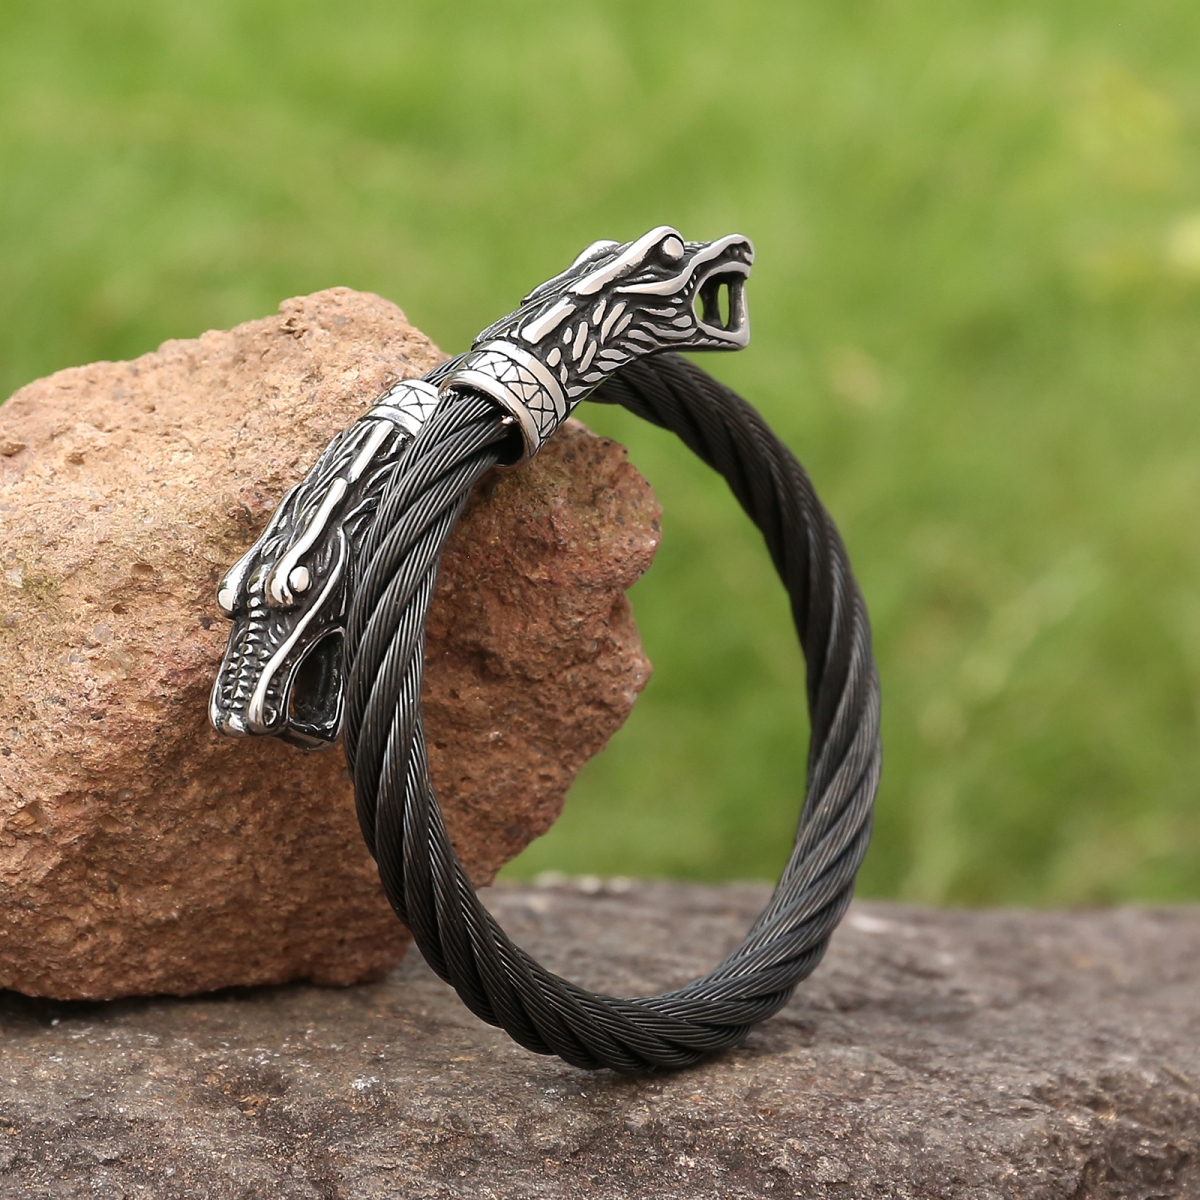 Popular Norse Gods-NORSECOLLECTION- Viking Jewelry,Viking Necklace,Viking Bracelet,Viking Rings,Viking Mugs,Viking Accessories,Viking Crafts